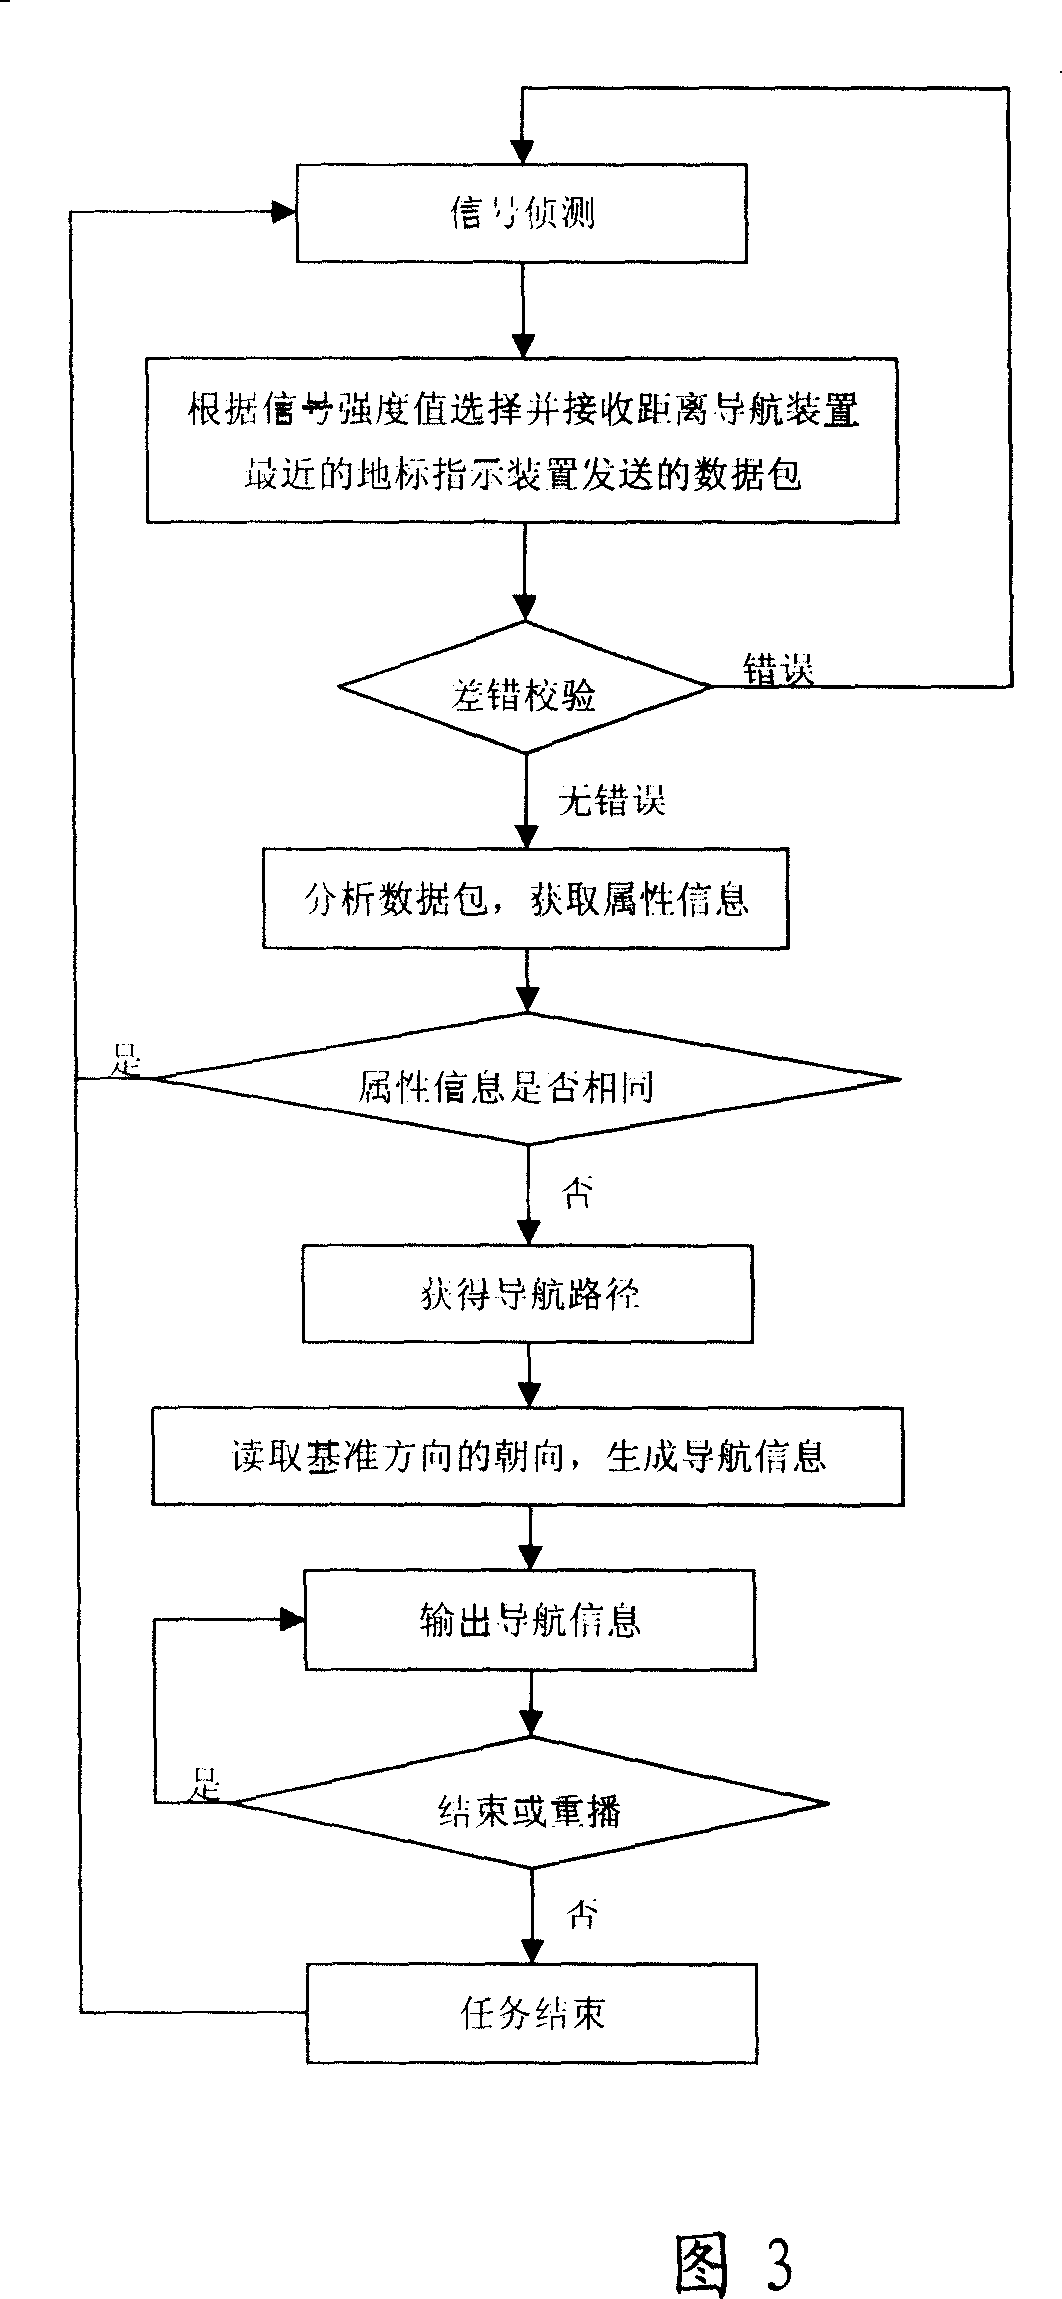 Navigation method used for navigation in small region